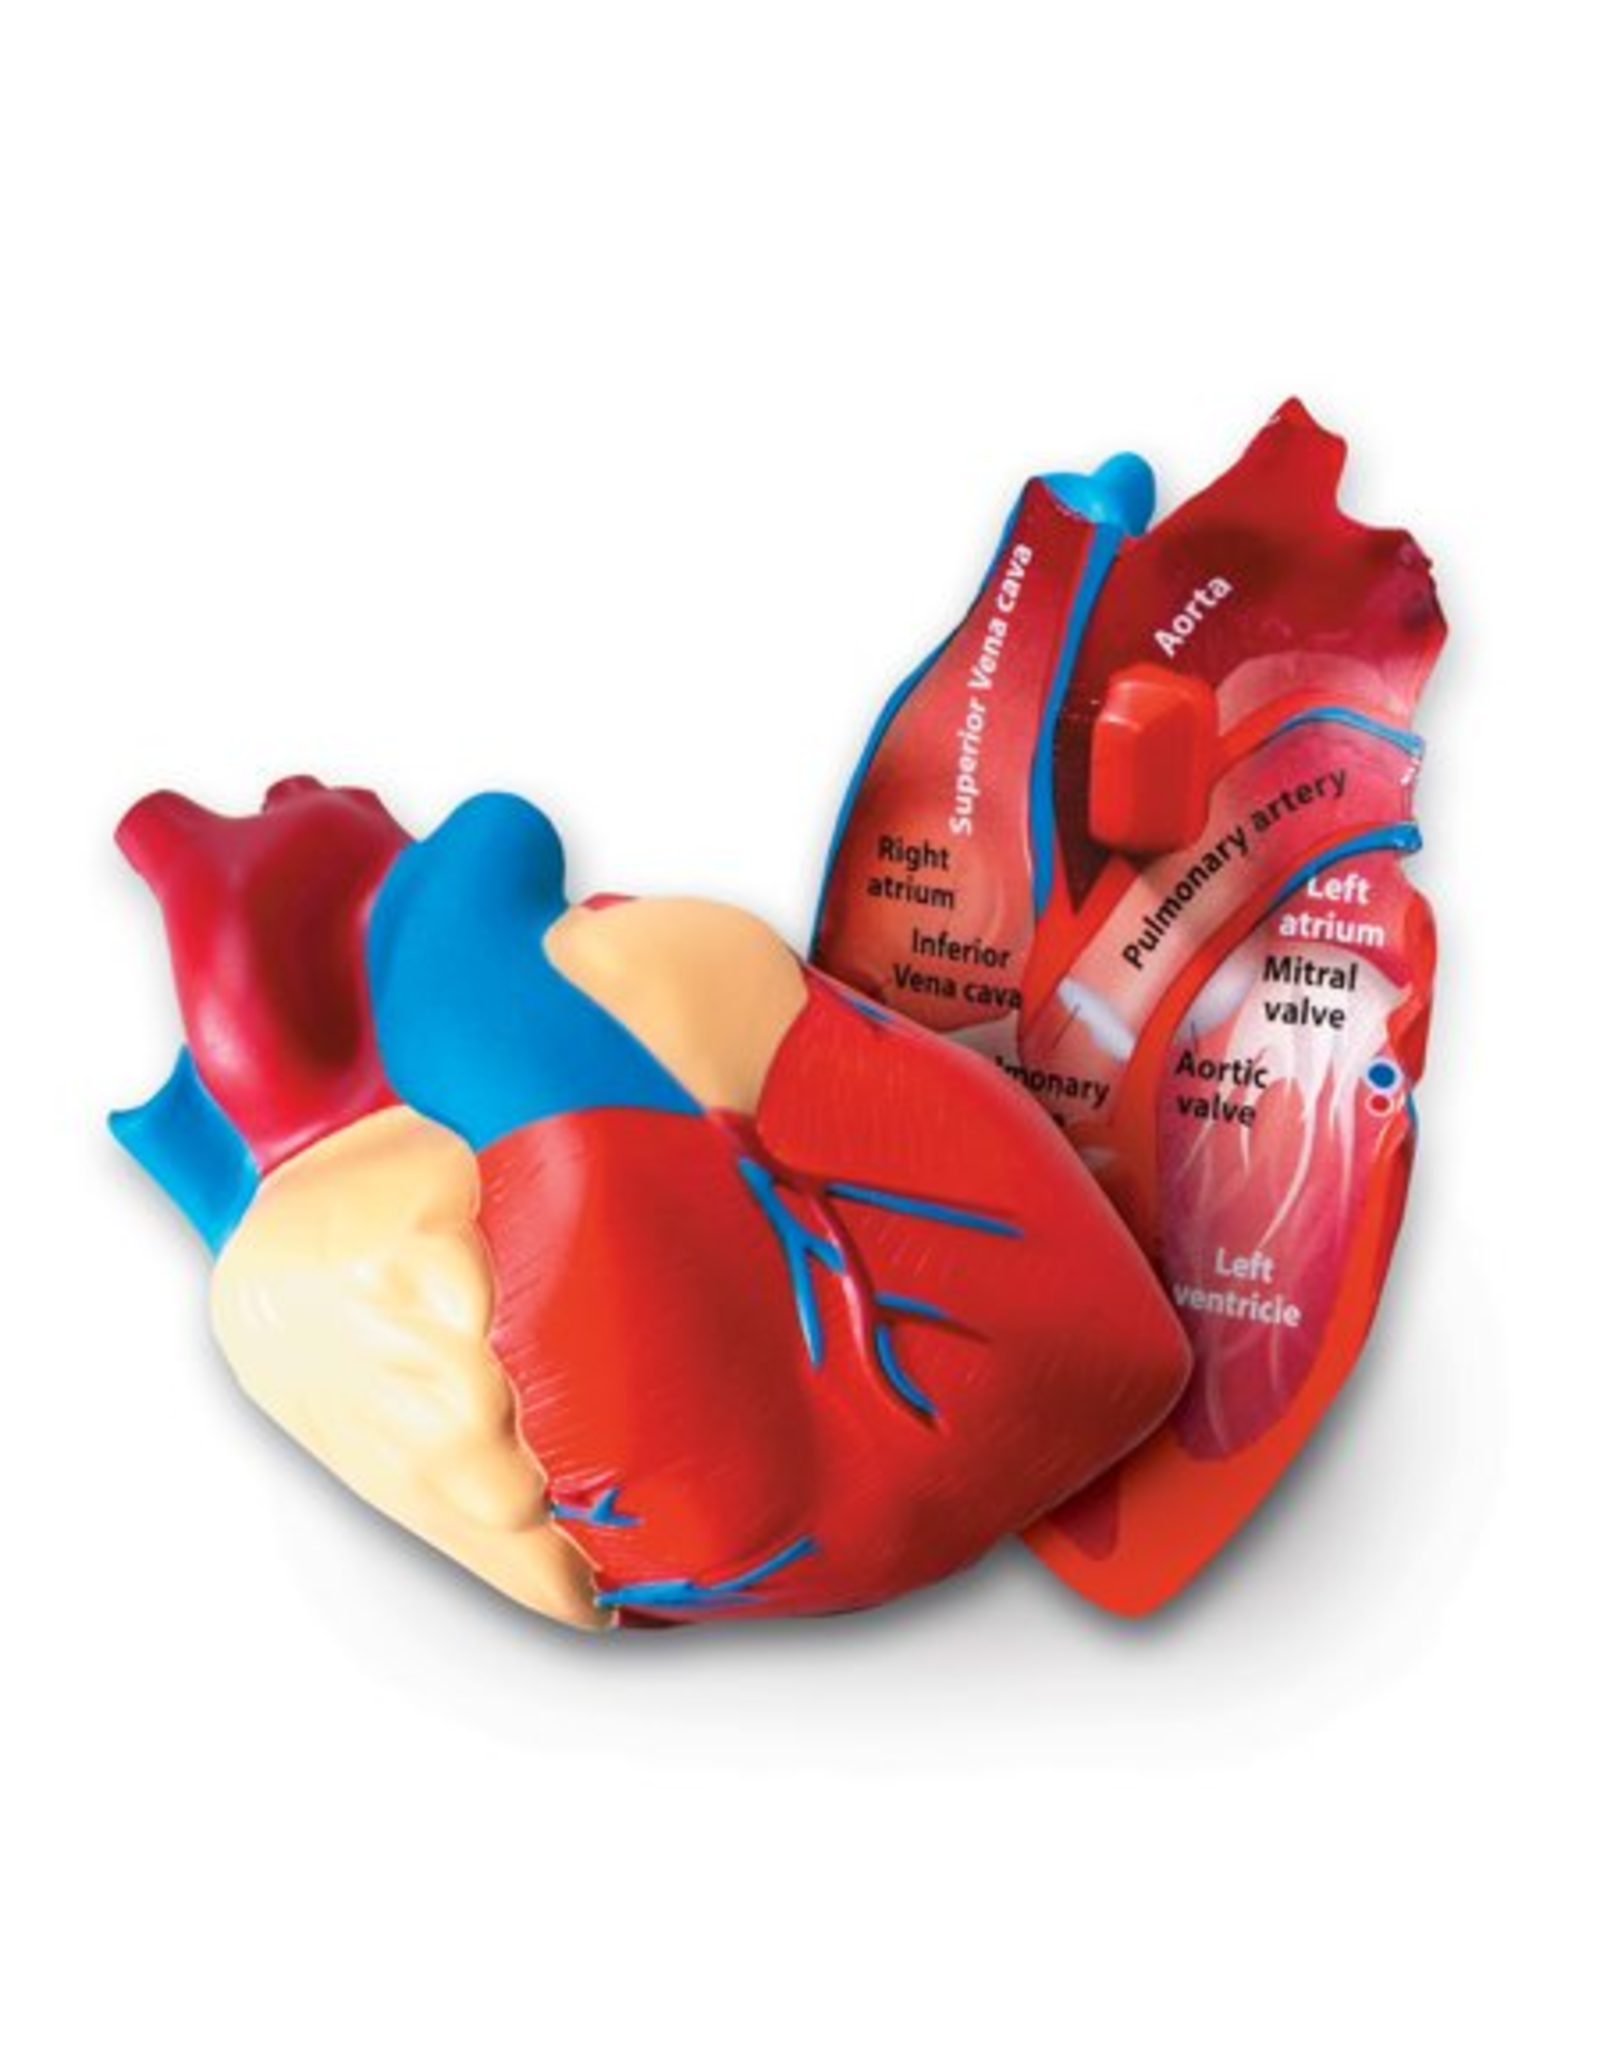 CROSS SECTION MODEL HEART